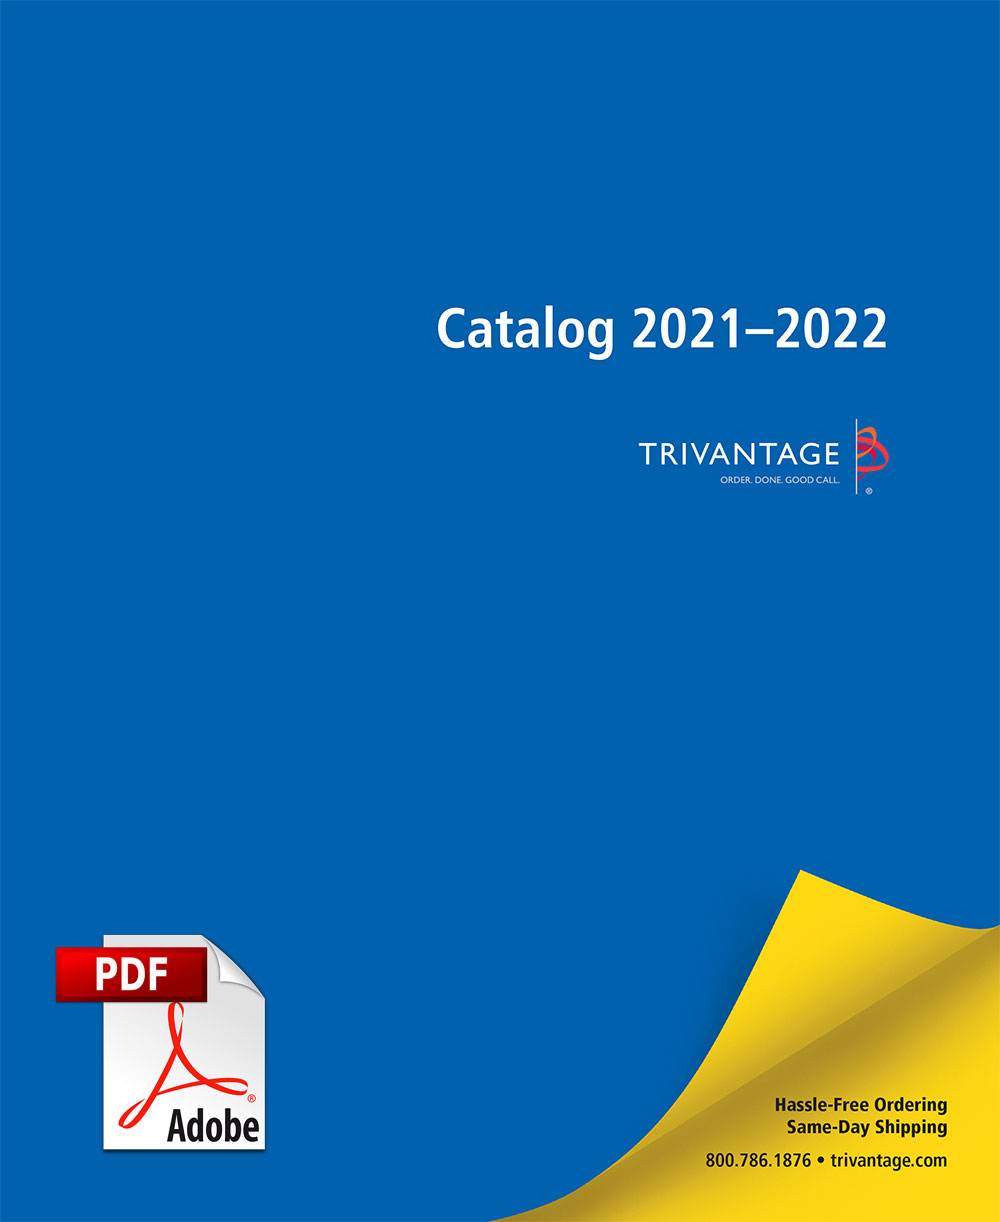 Trivantage product catalog cover 2021-2022